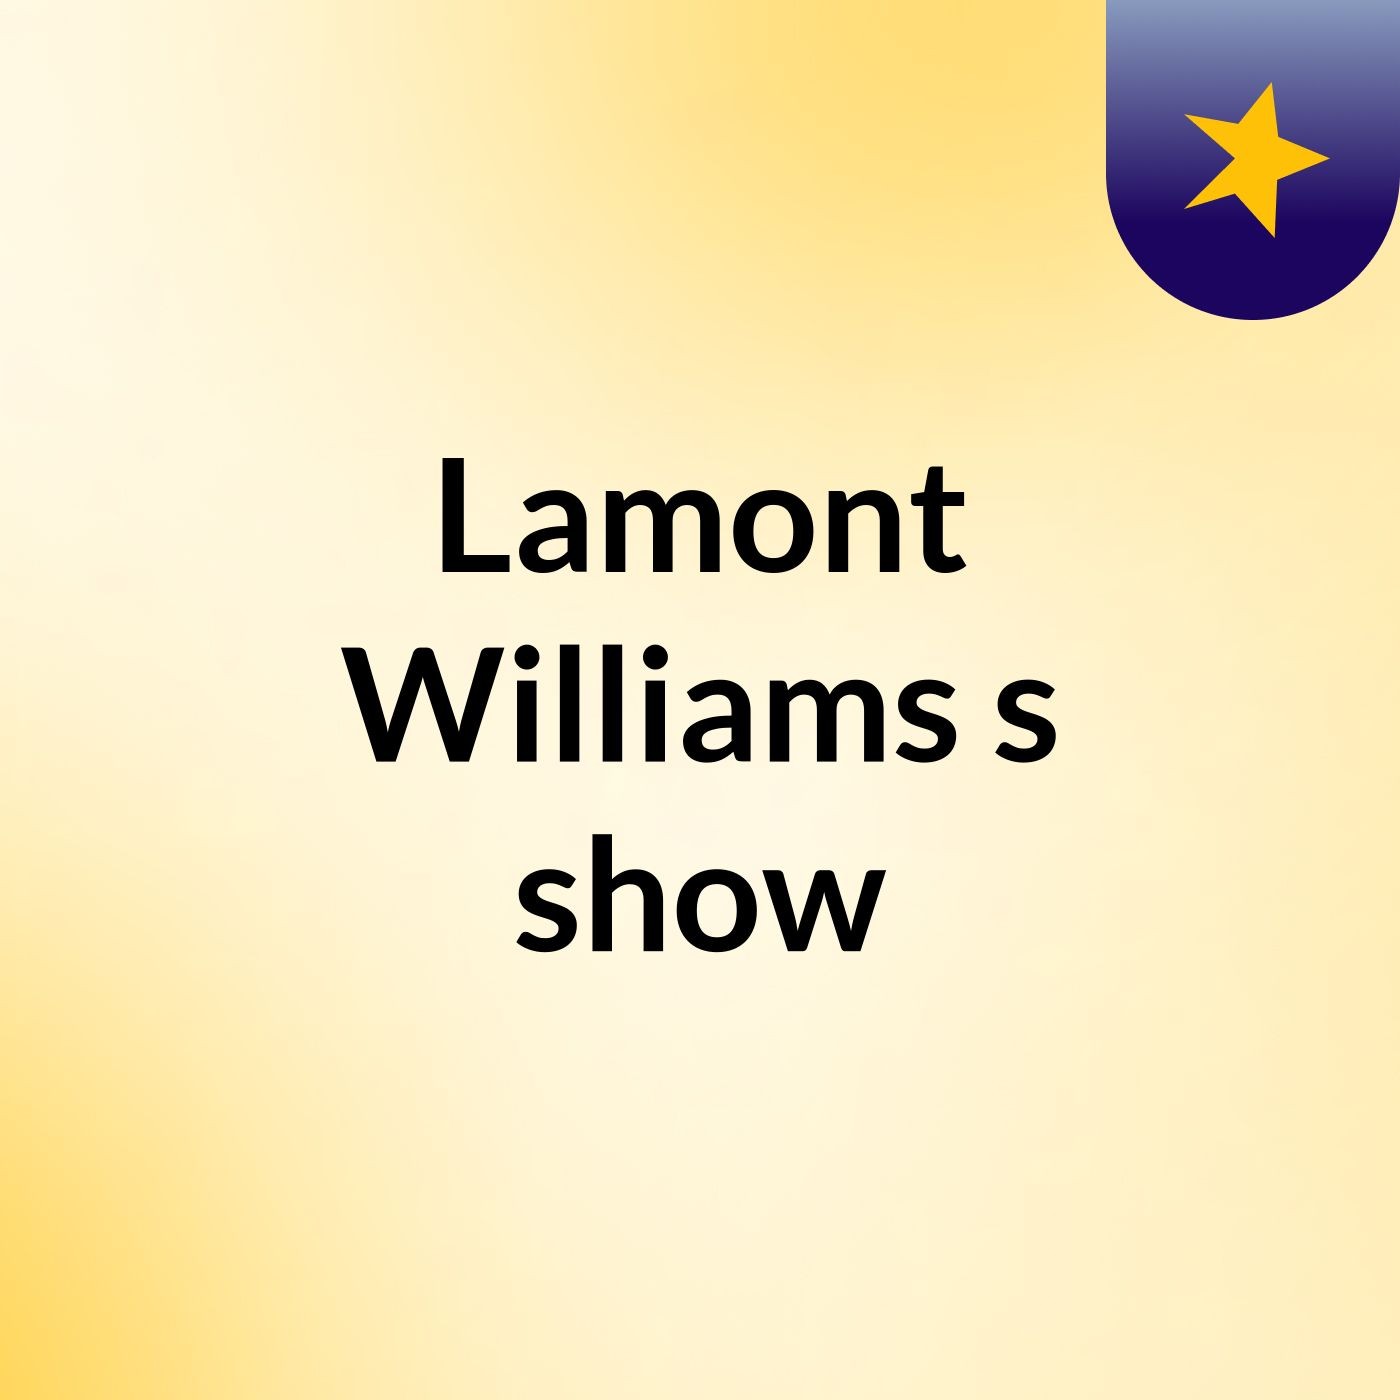 Lamont Williams's show